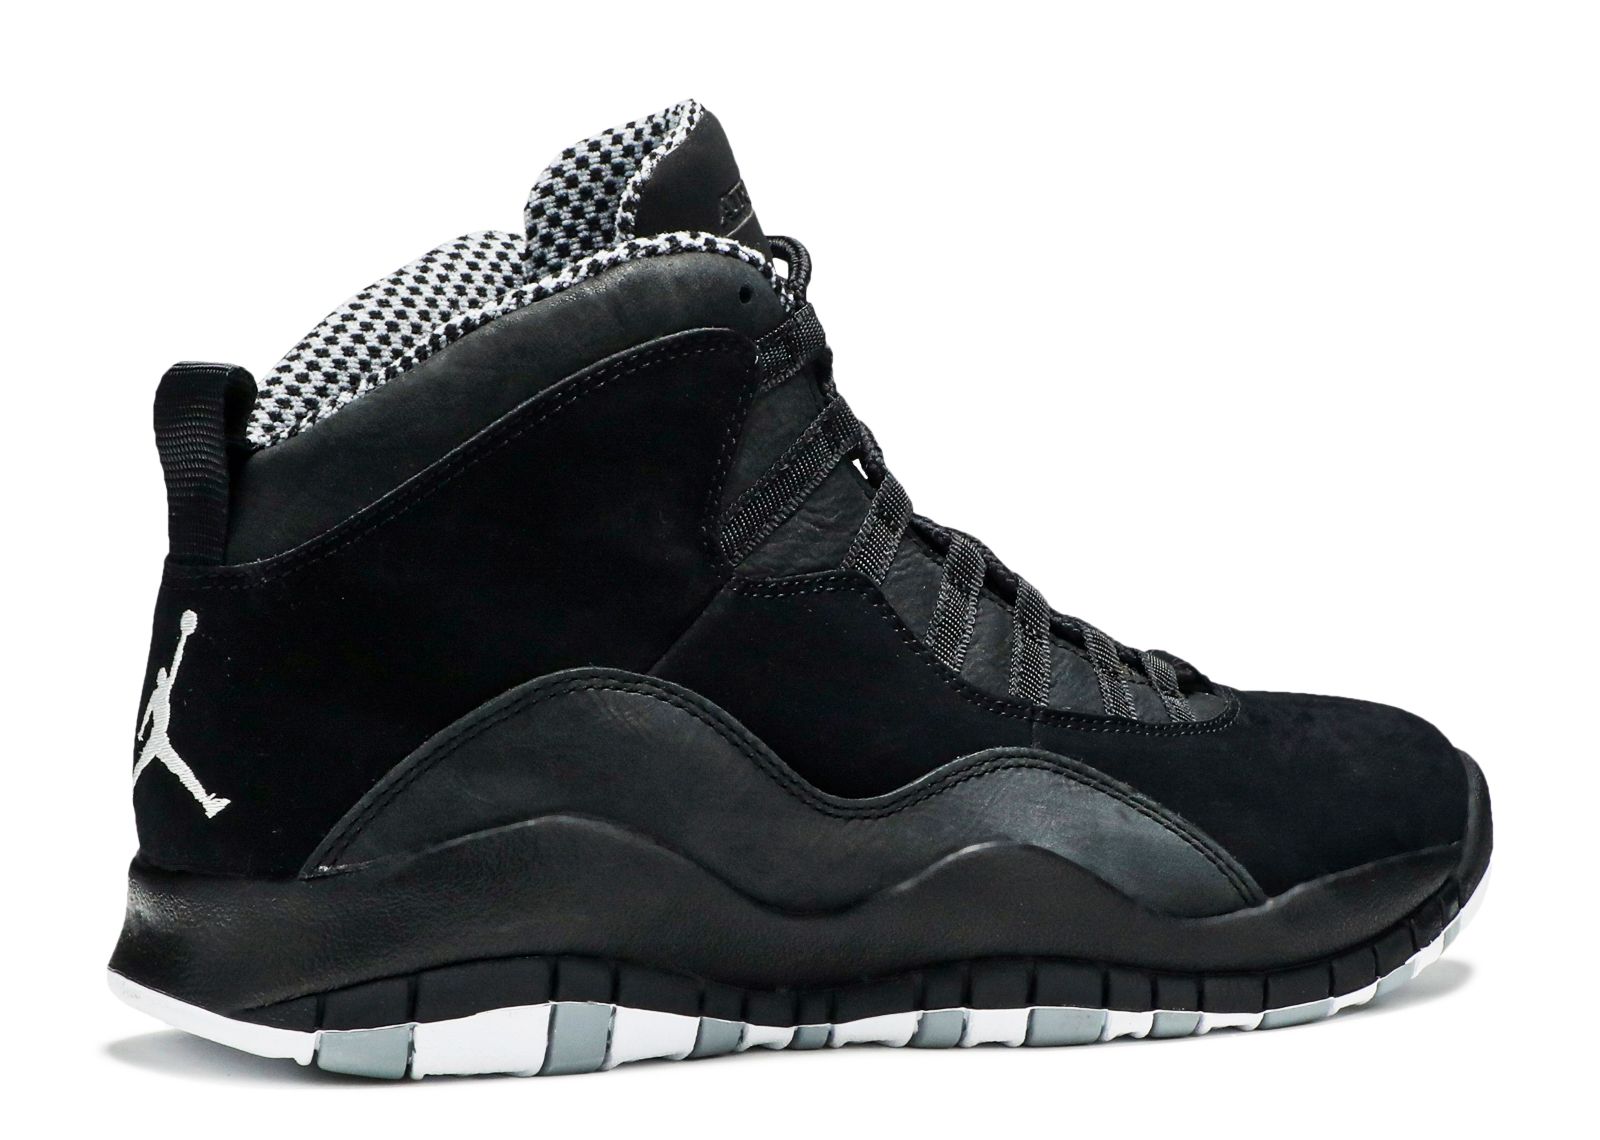 Sneaker Steal on X: STEAL💥 Air Jordan 10 Retro Woodland Camo